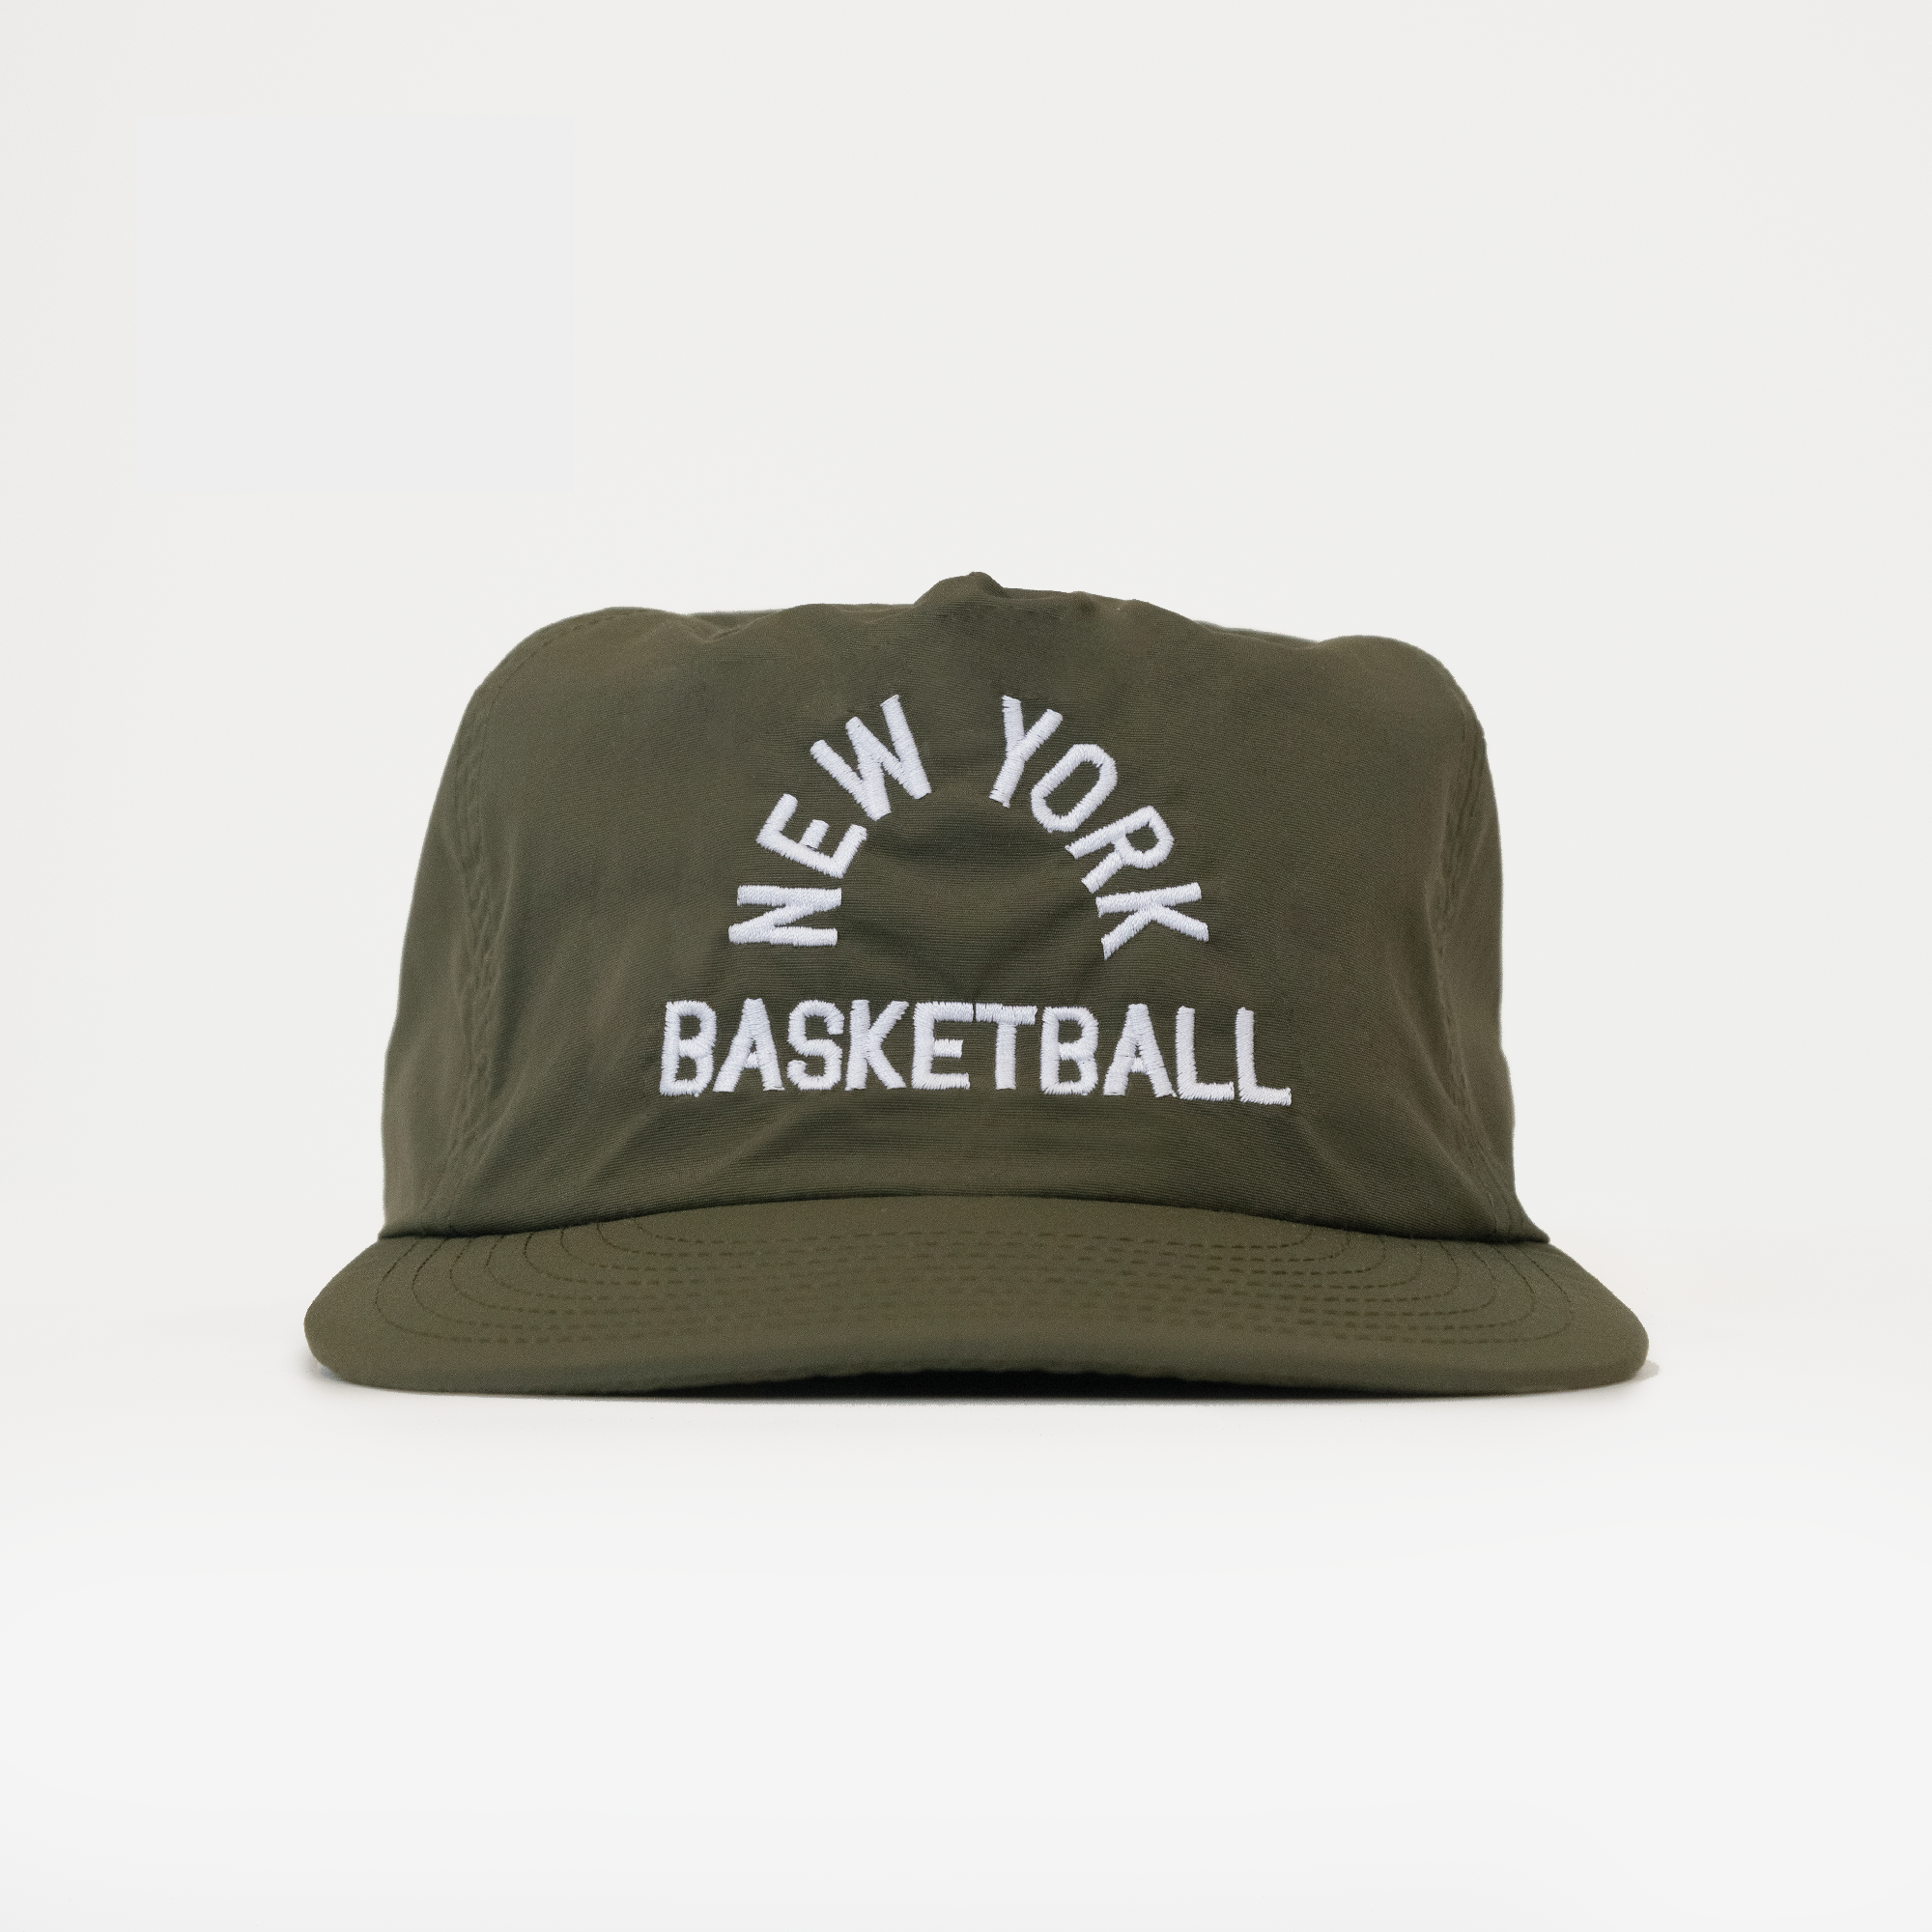 Army Green New York Basketball Hat